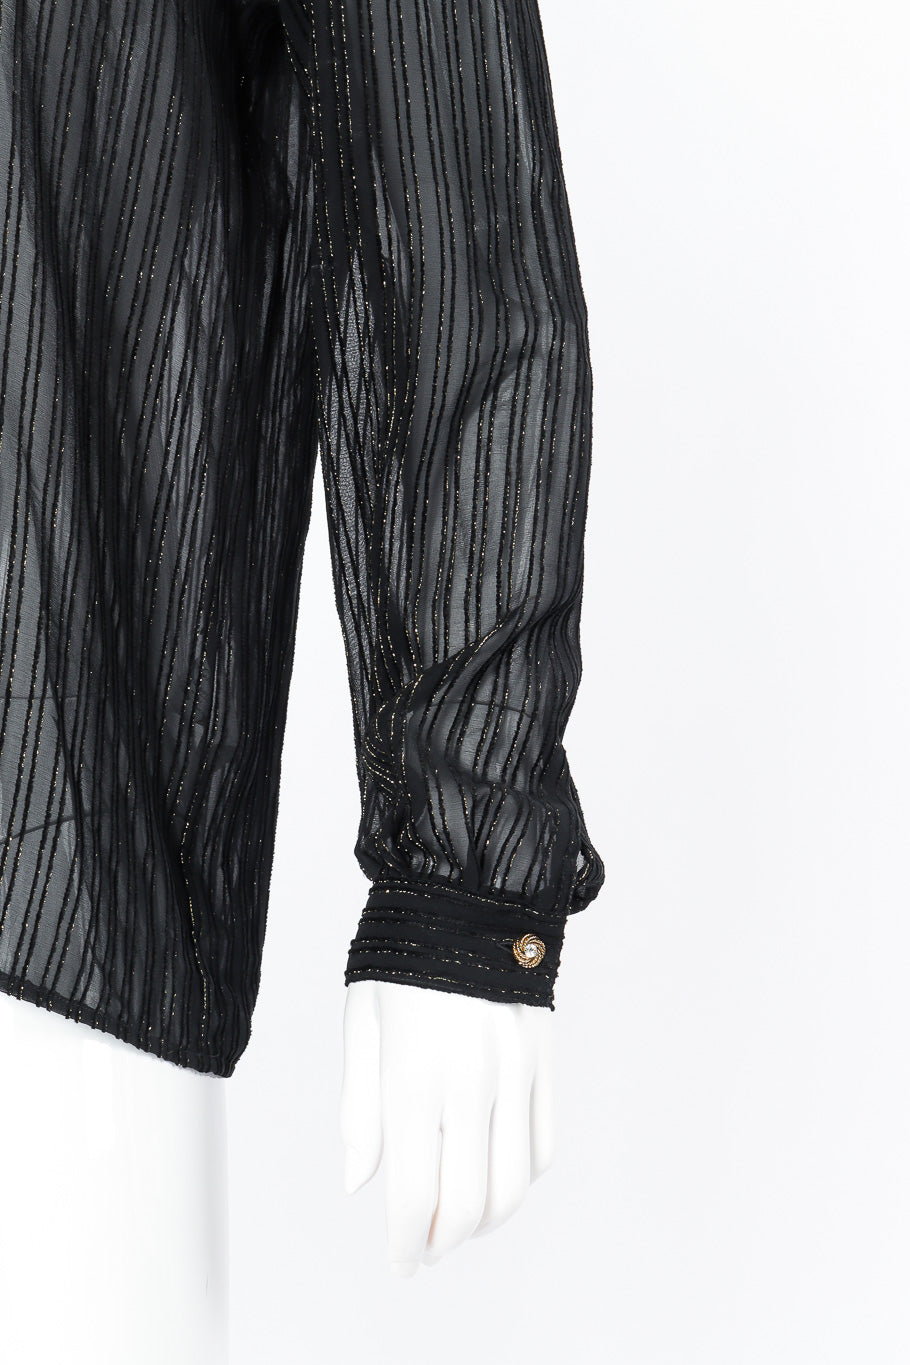 Valentino sheer lamé stripe blouse sleeve details @recessla